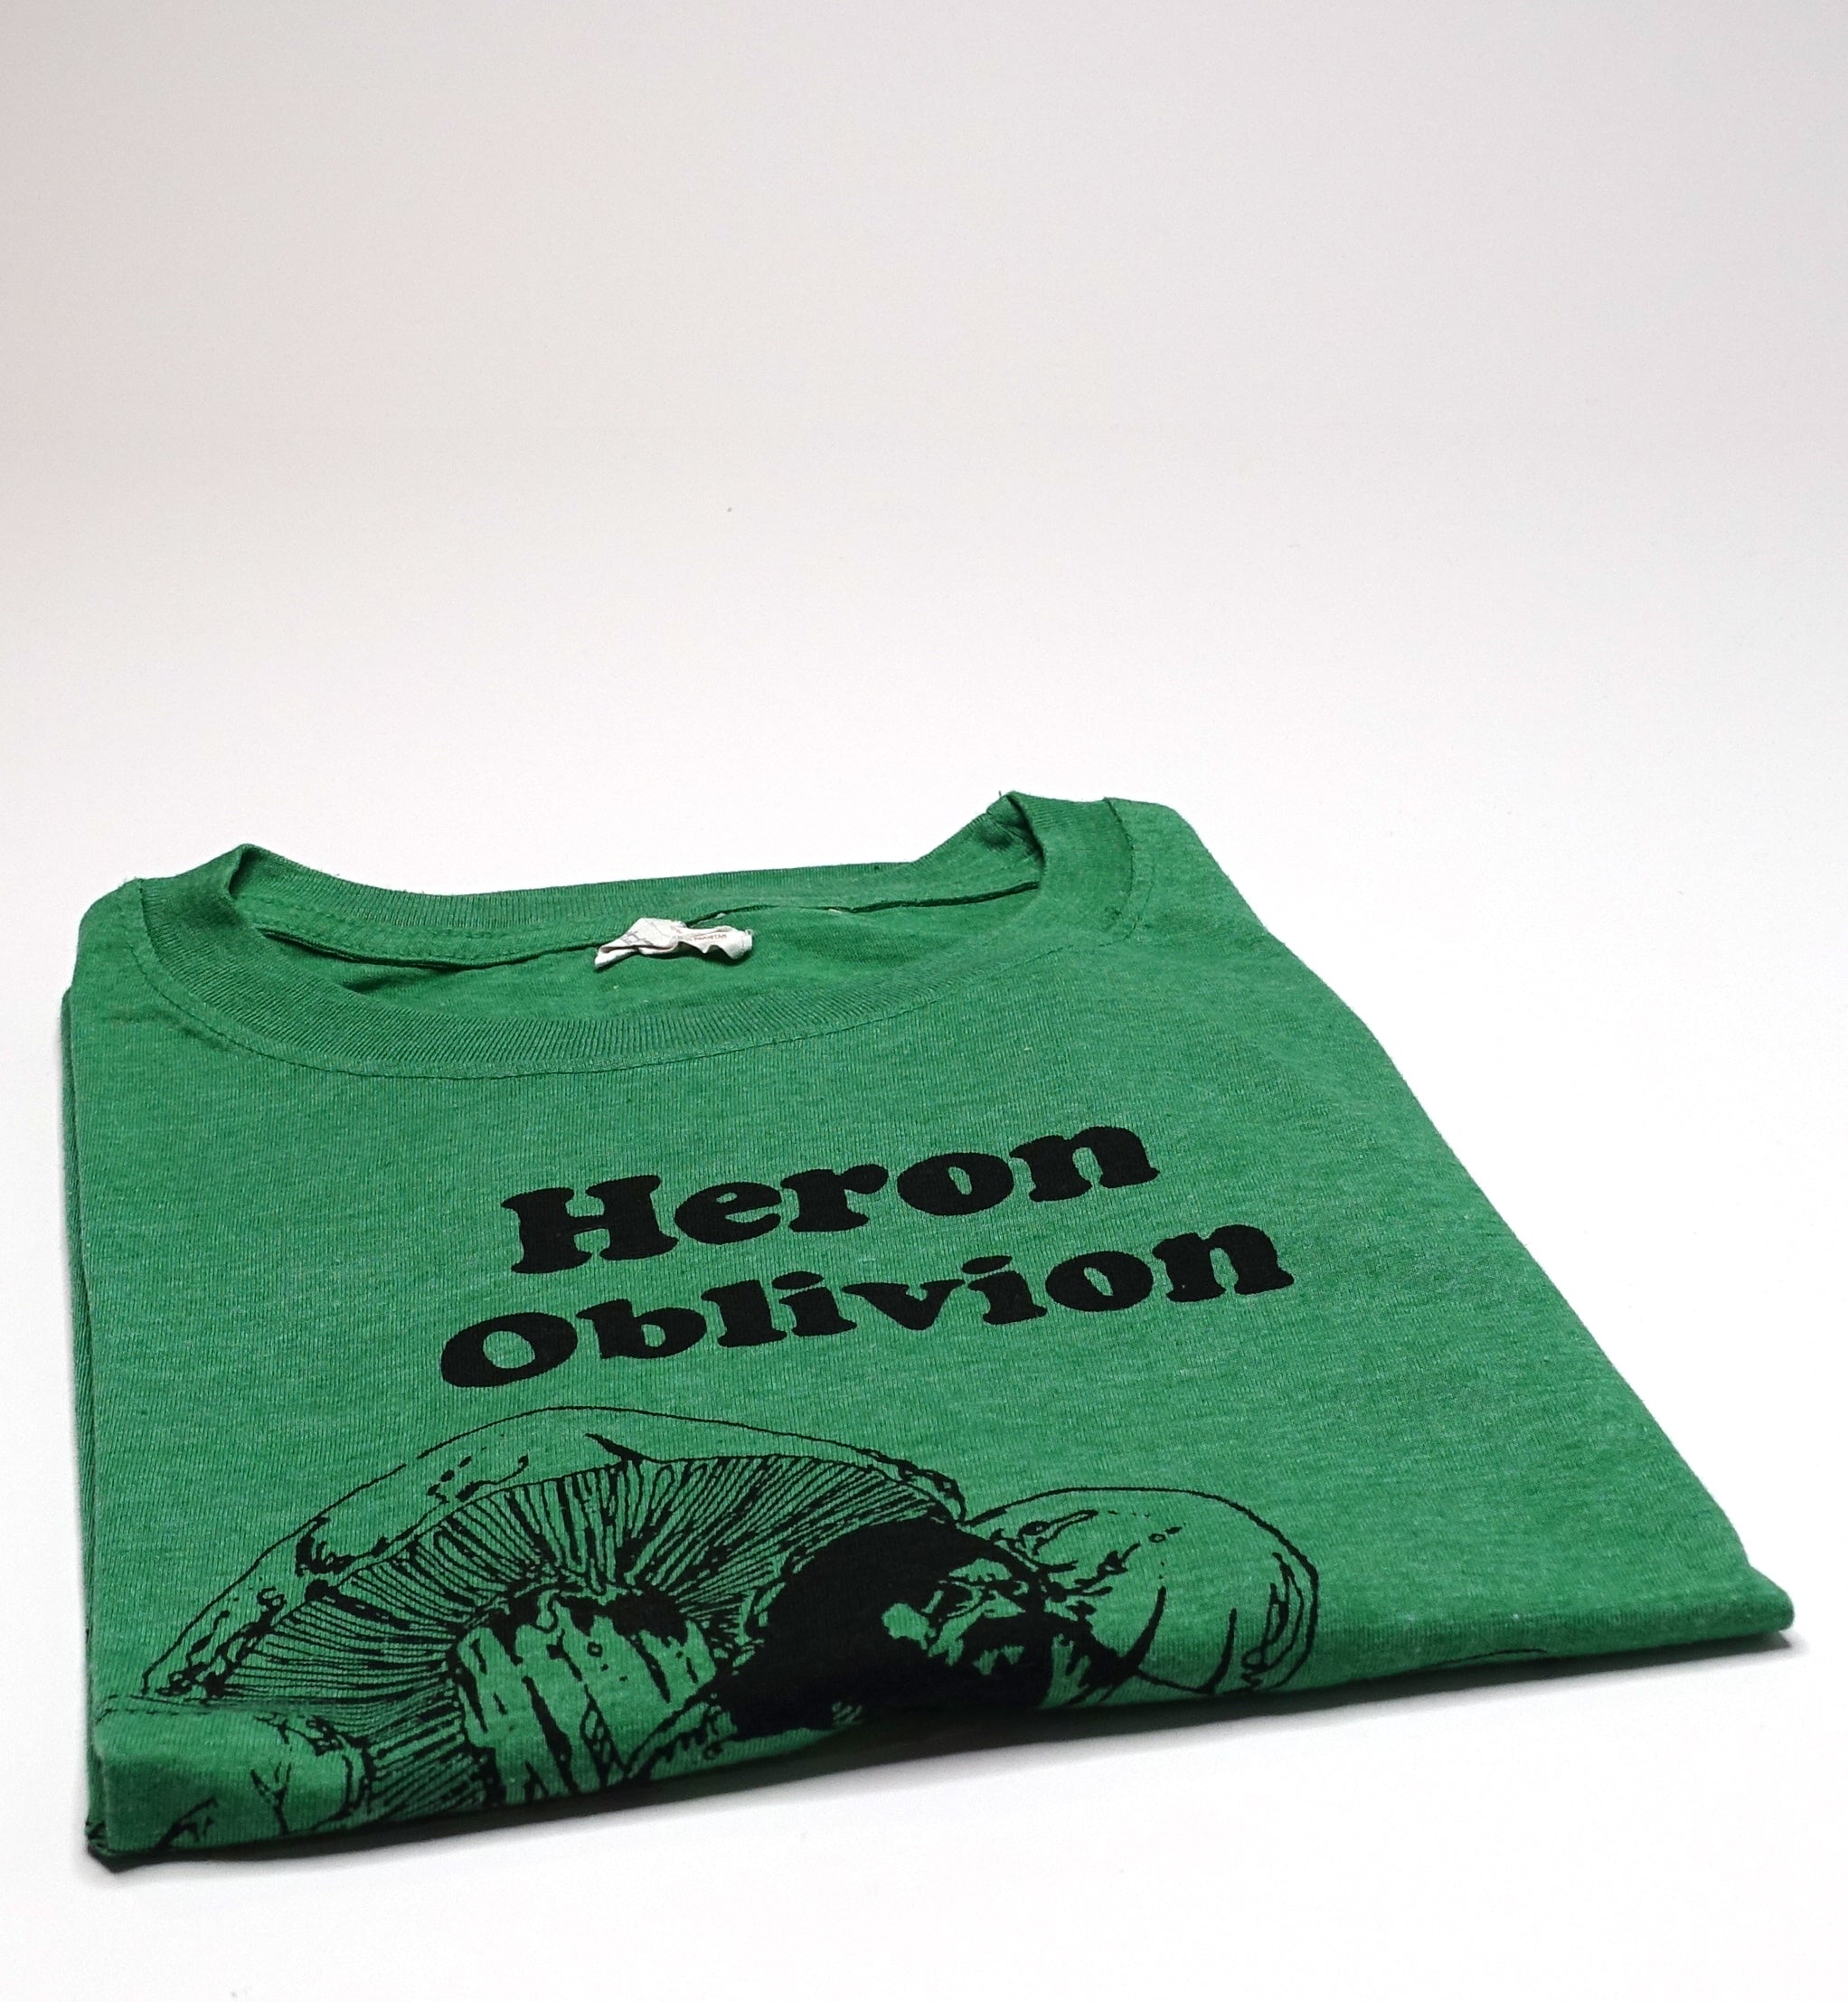 Heron Oblivion – Shroomin' Biker 2016 Tour Shirt Size Large